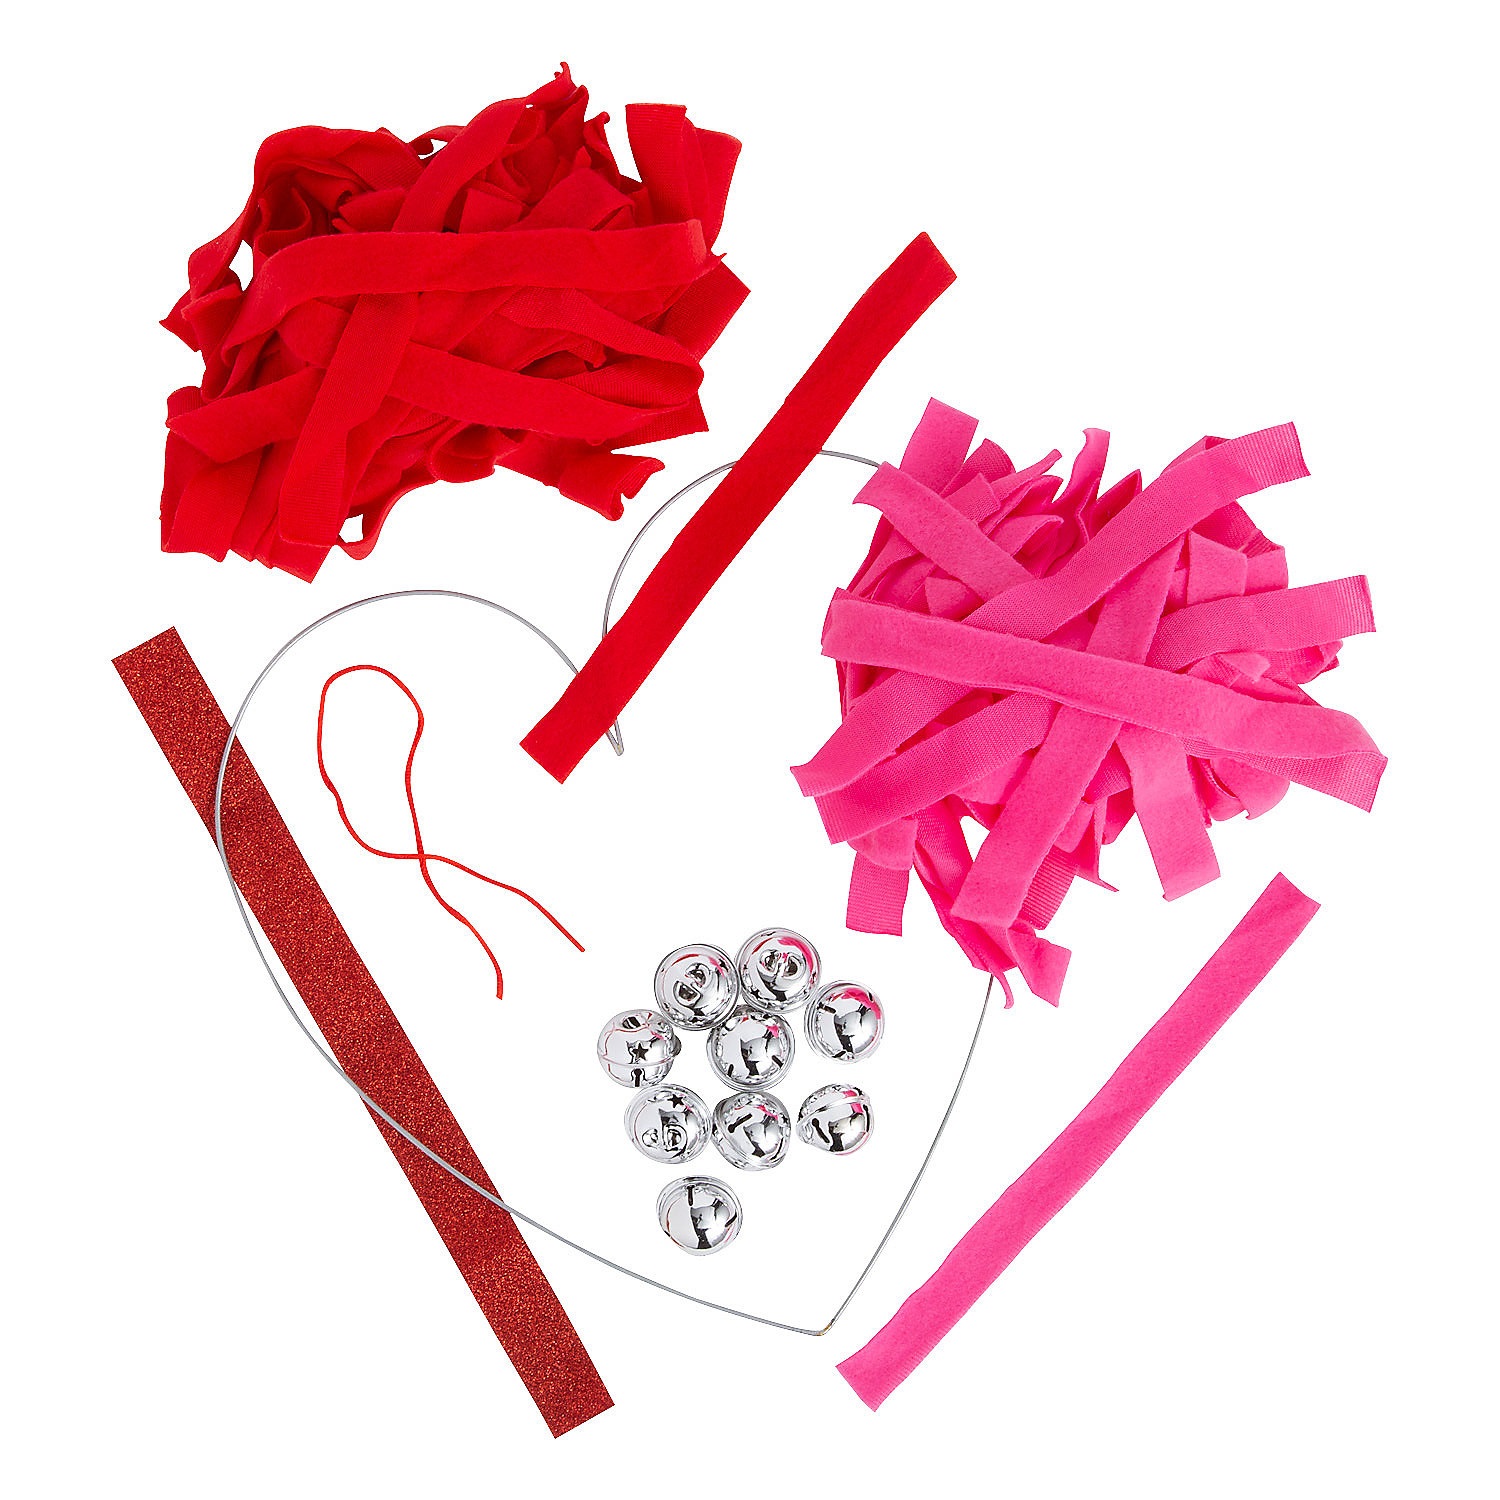 fleece-tied-valentine-heart-wreath-craft-kit-makes-3_14096982-a01